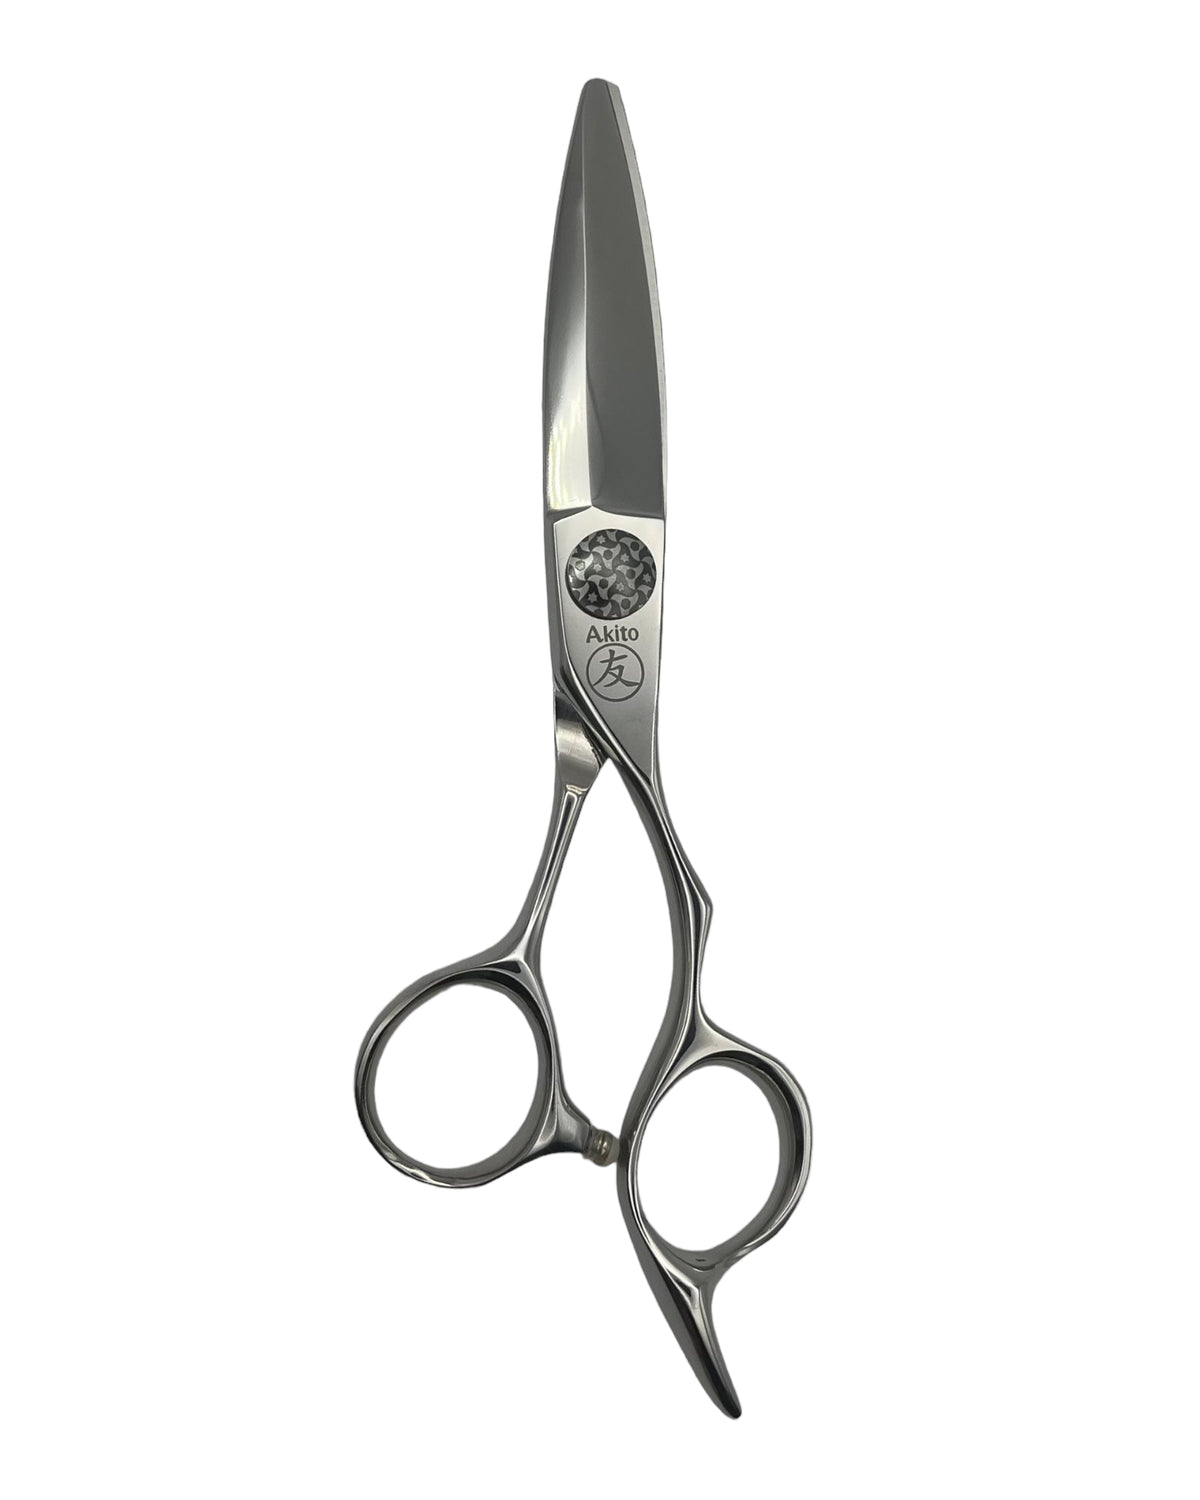 Omega Slicing and Sliding hairdressing scissors